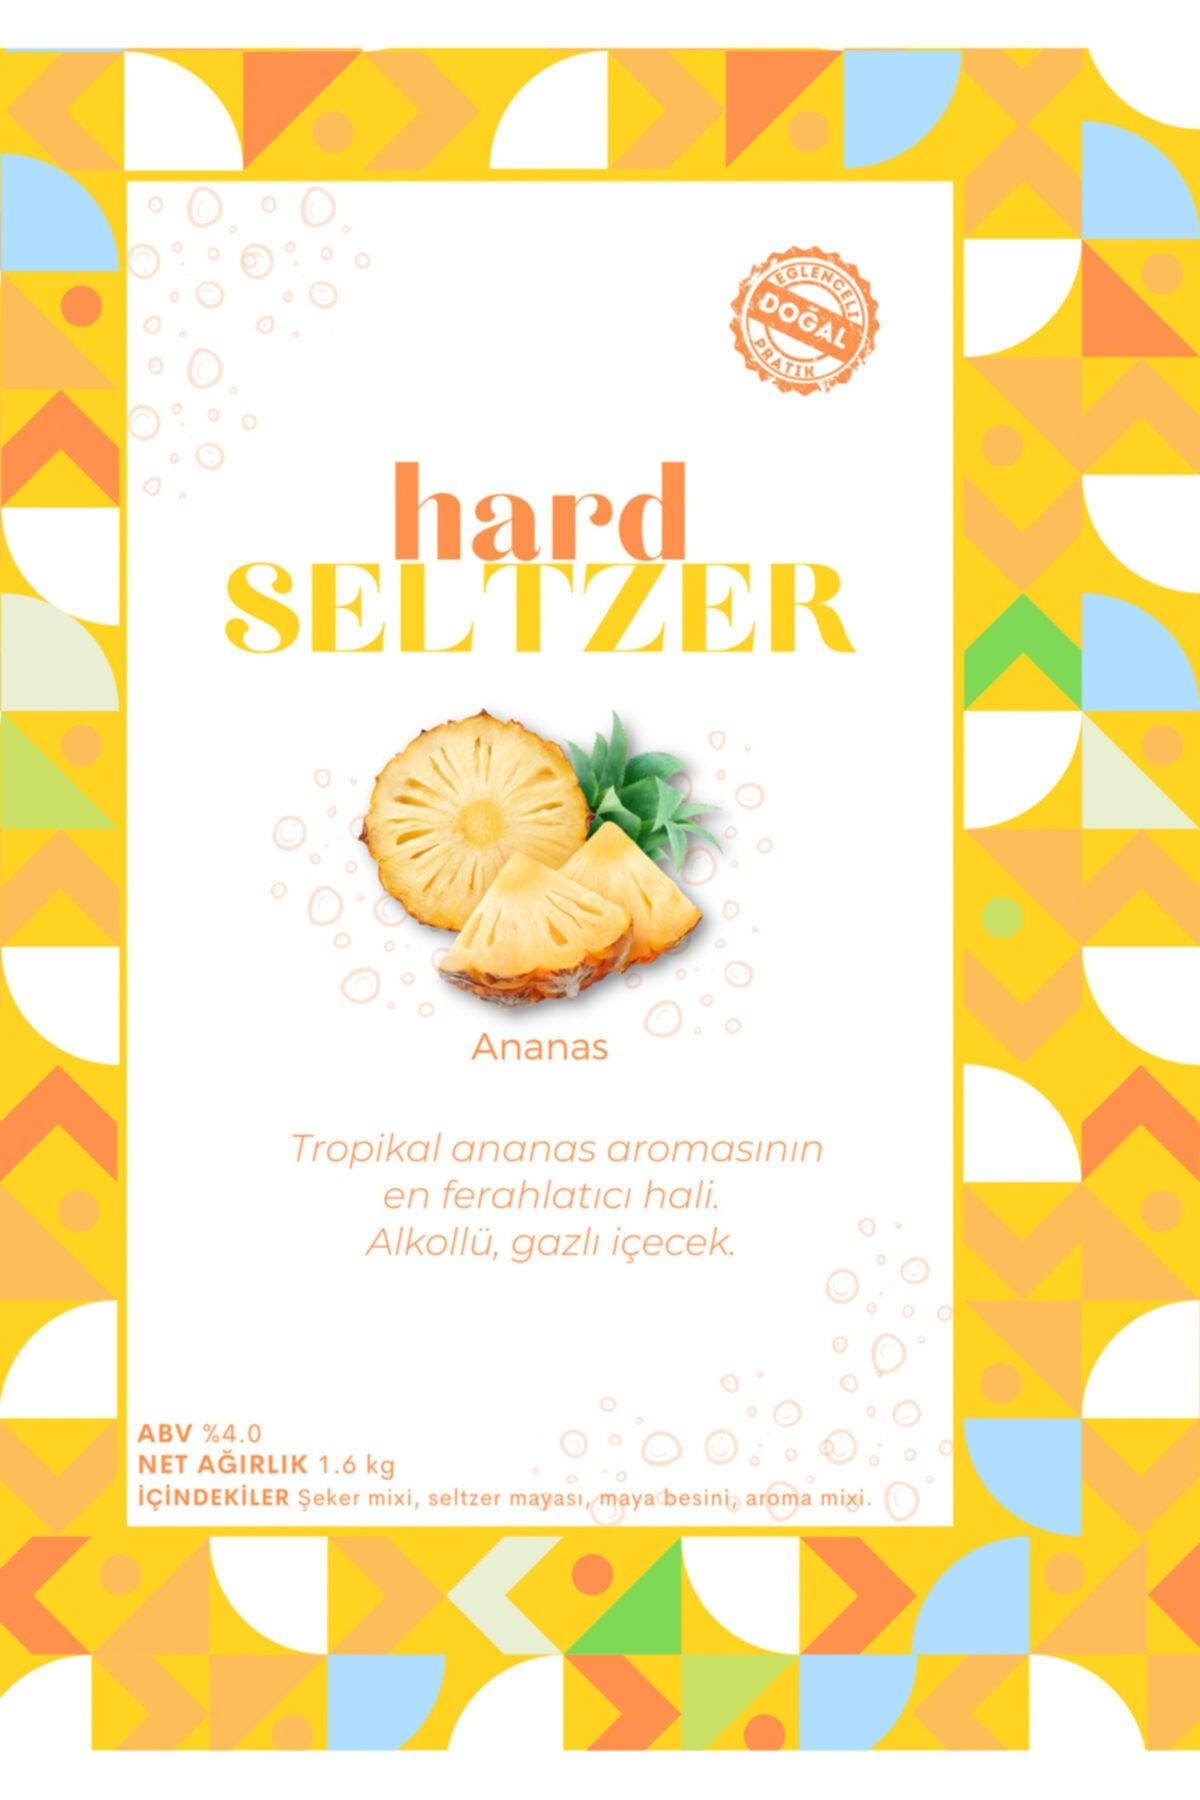 Vinomarket Hard Seltzer - Ananaslı